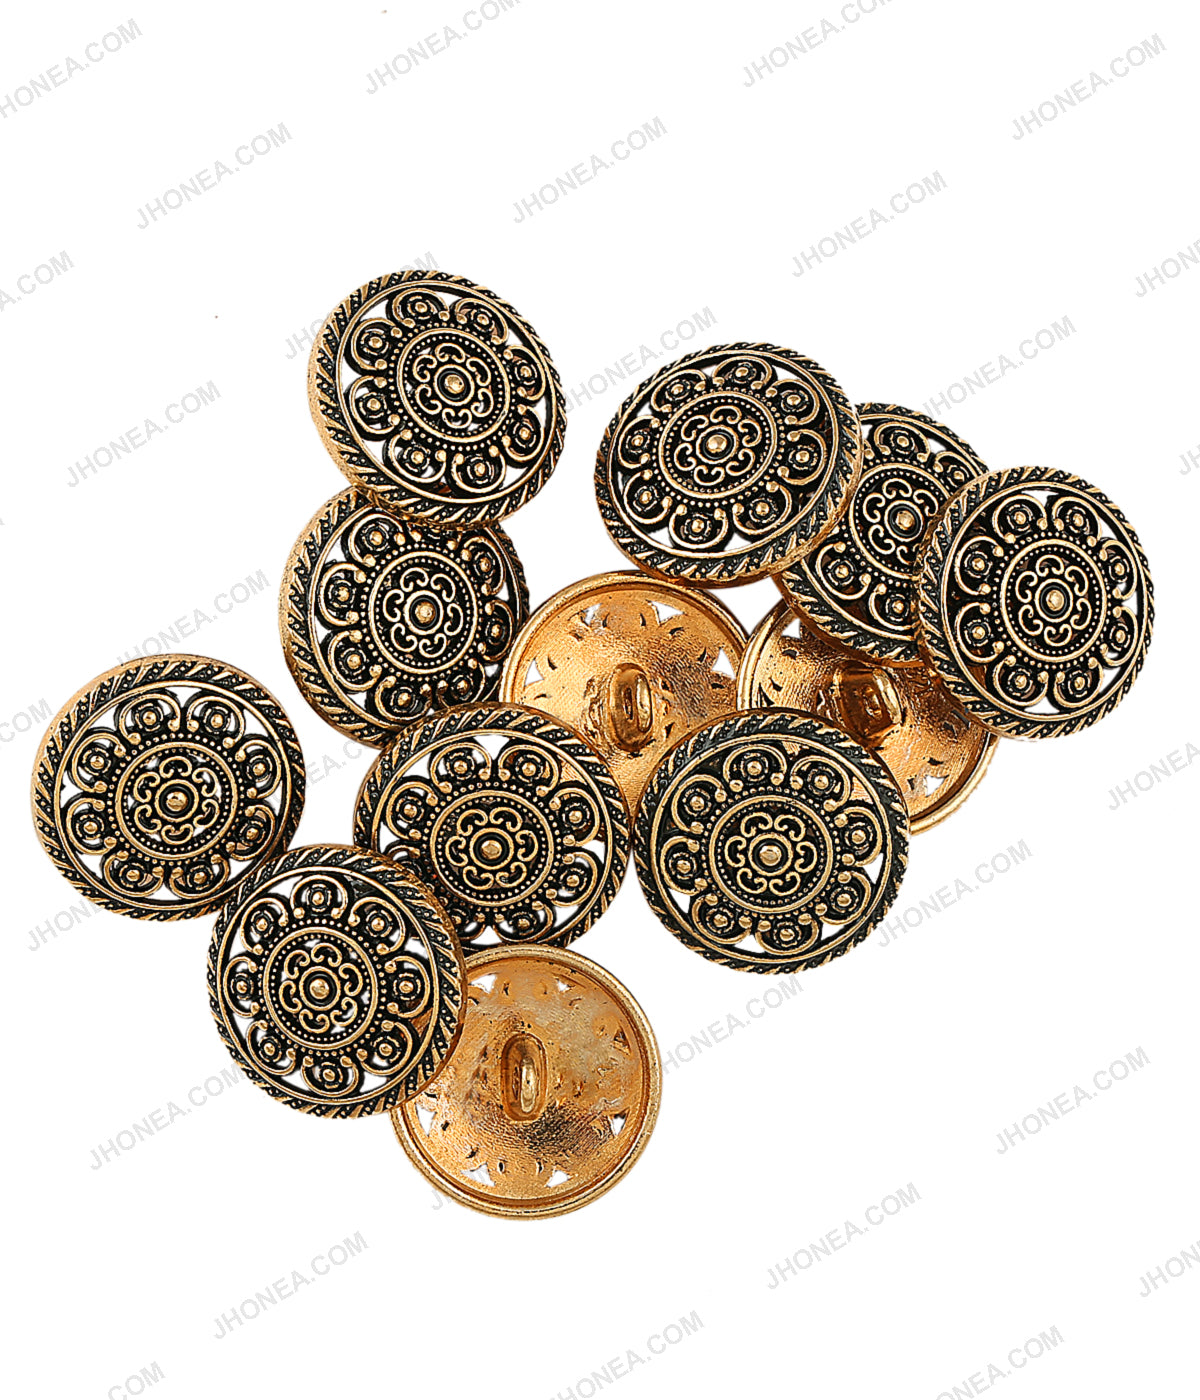 Pretty Vintage Cutwork Design Antique Ethnic Buttons in Antique Gold Color